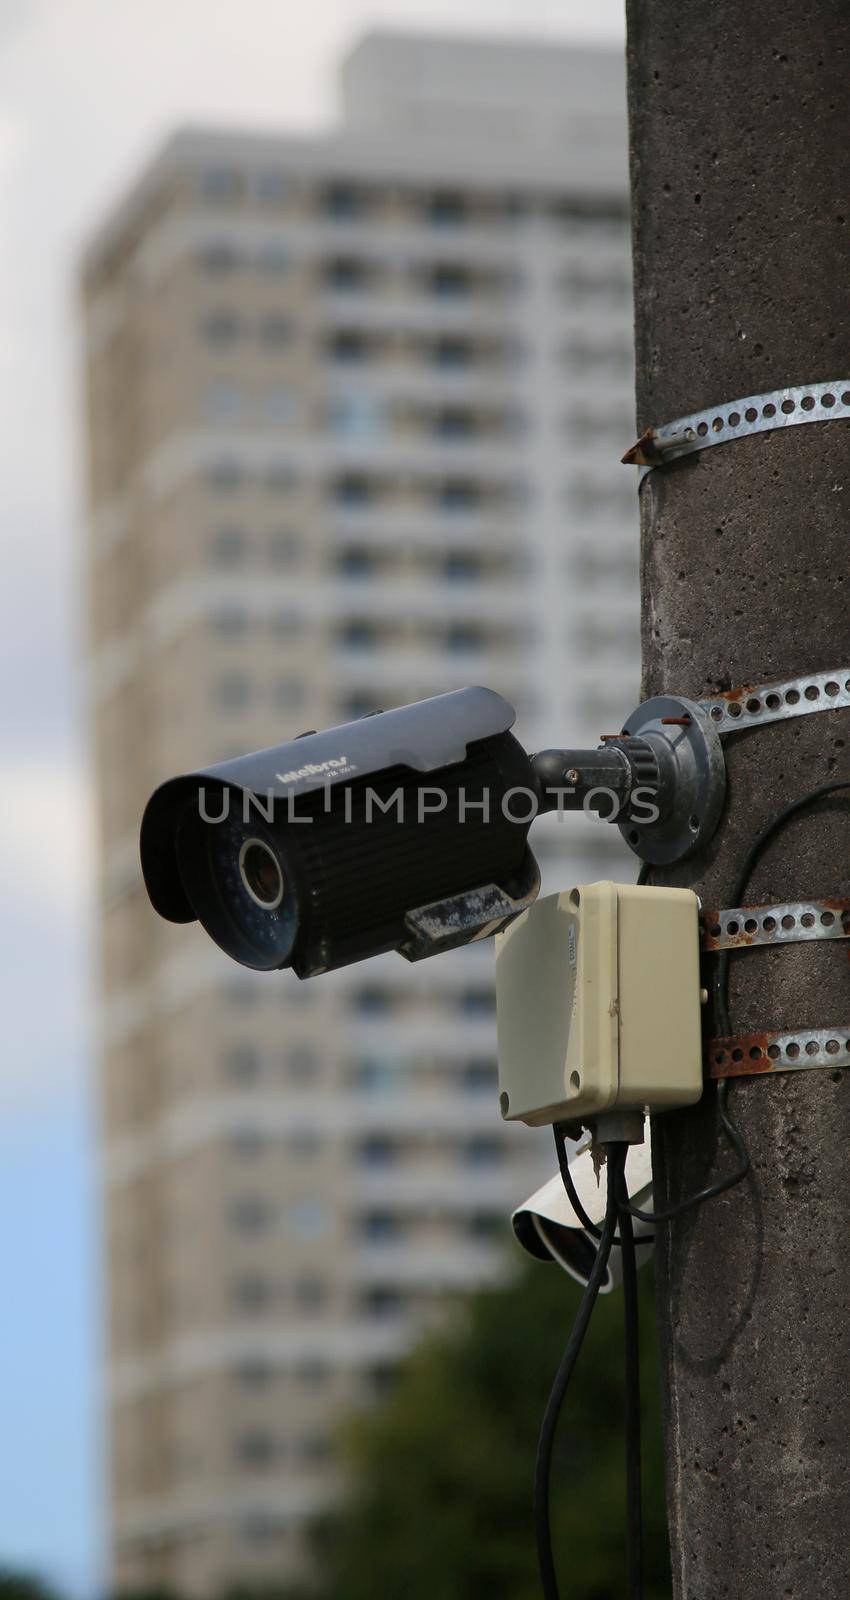 monitoring and security camera in condominium by joasouza